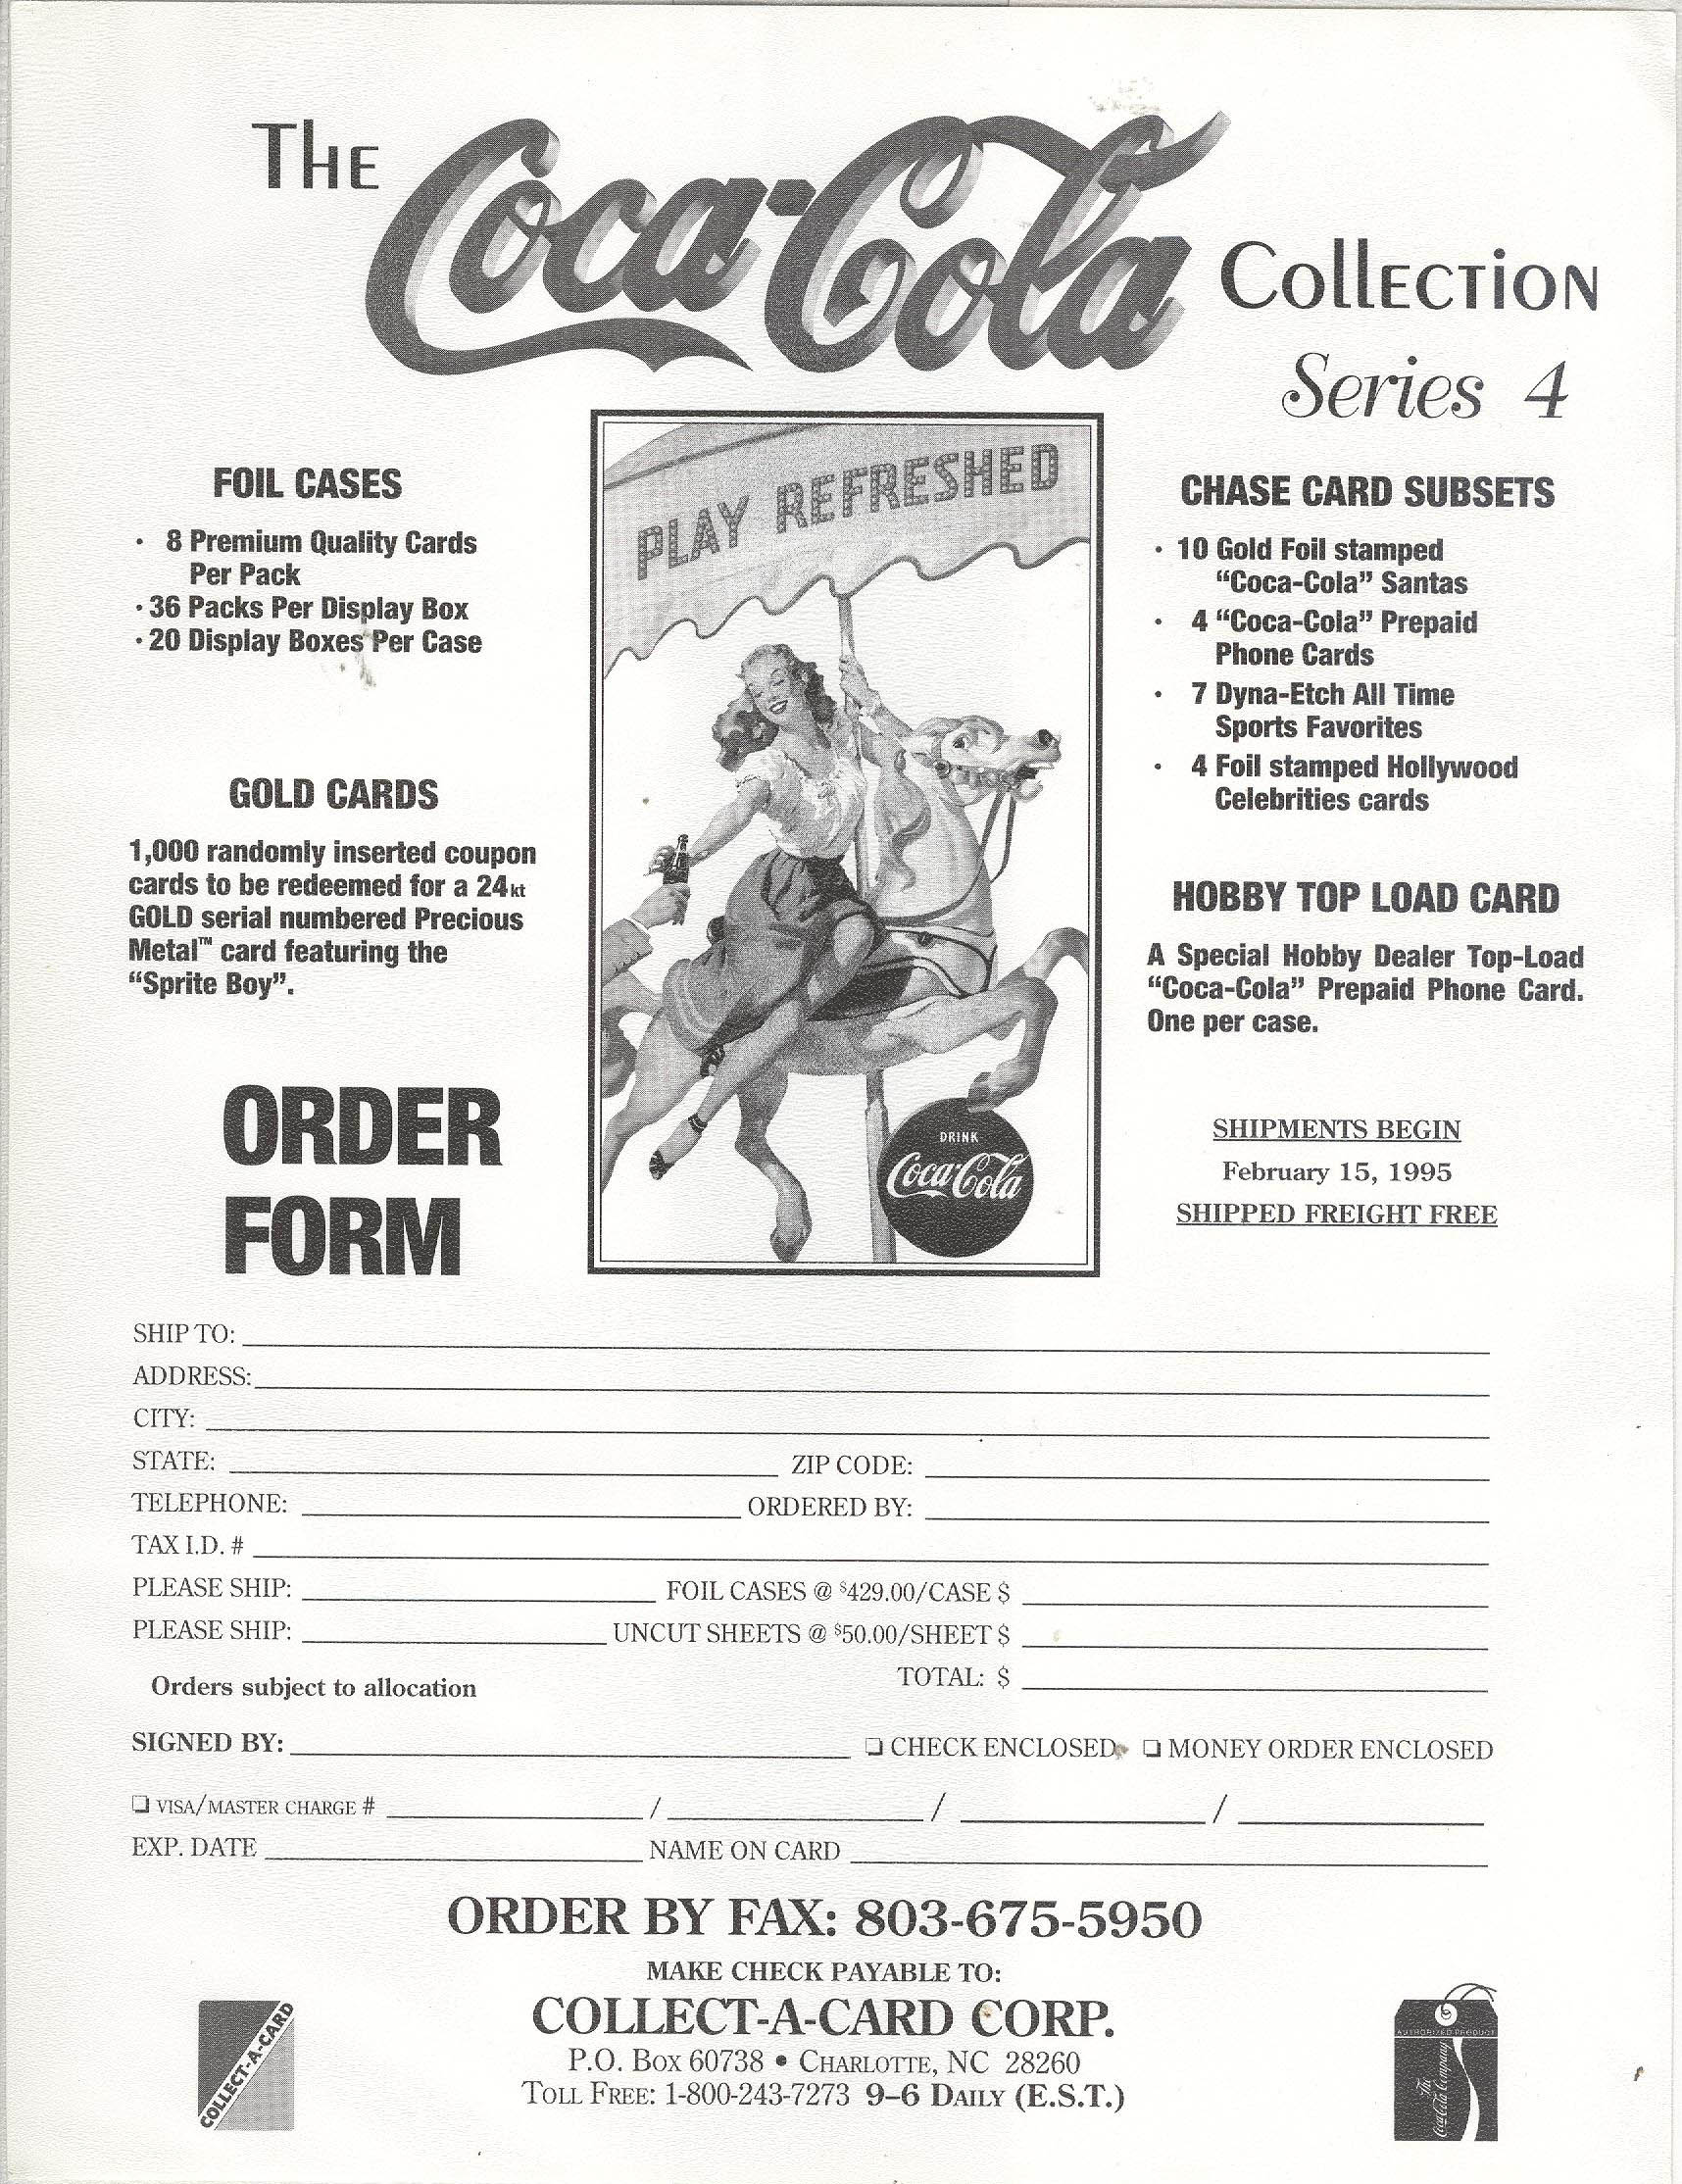 NEW 1996 Coca Cola Sign of Good Taste Polar Bear Subset Card # 7